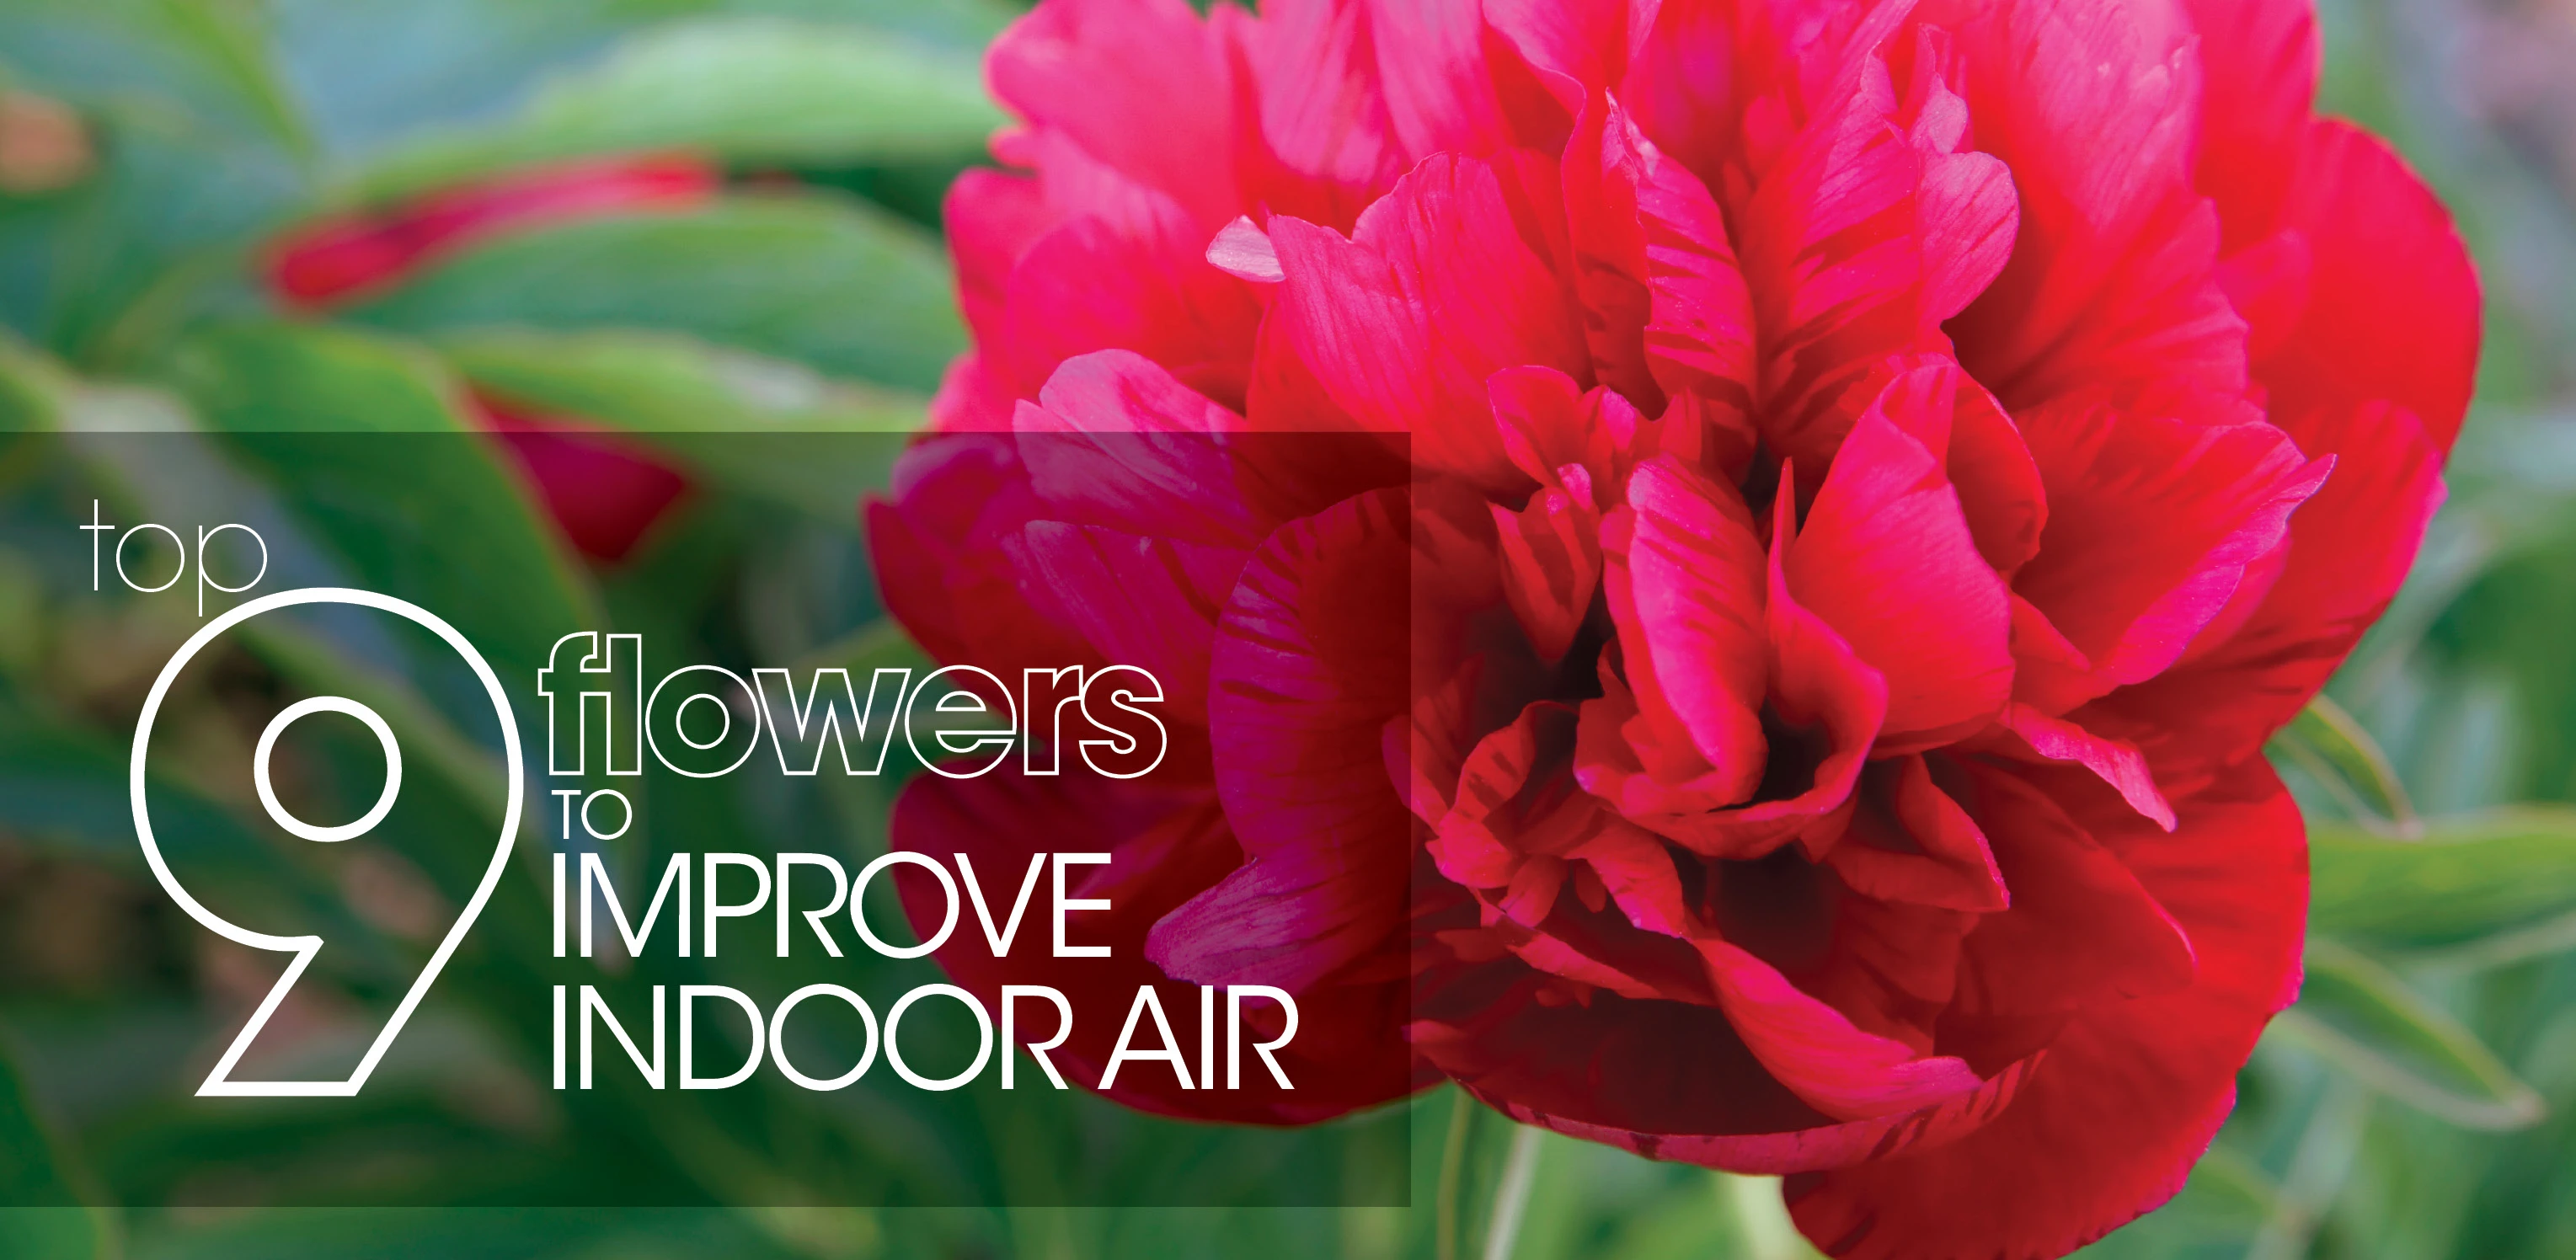 top 9 flowers to improve indoor air